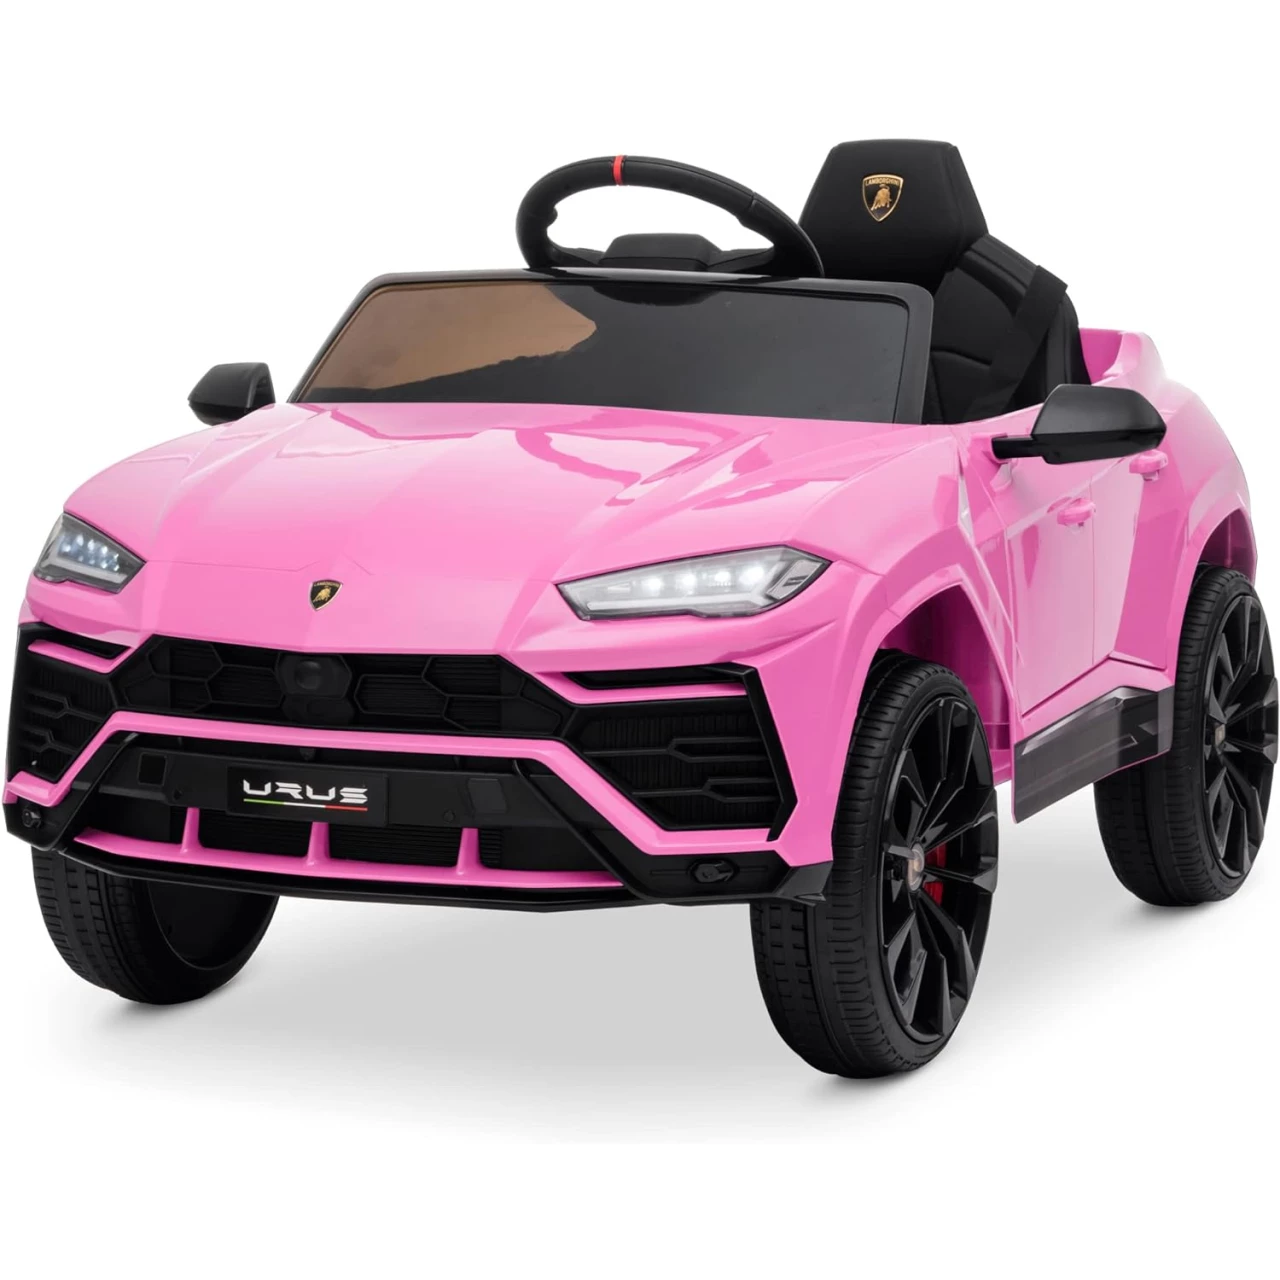 Kidzone Ride On Car 12V Lamborghini Urus Kids Electric Vehicle Toy w/Parent Remote Control, Horn, Radio, USB Port, AUX, Spring Suspension, Opening Door, LED Light - Pink